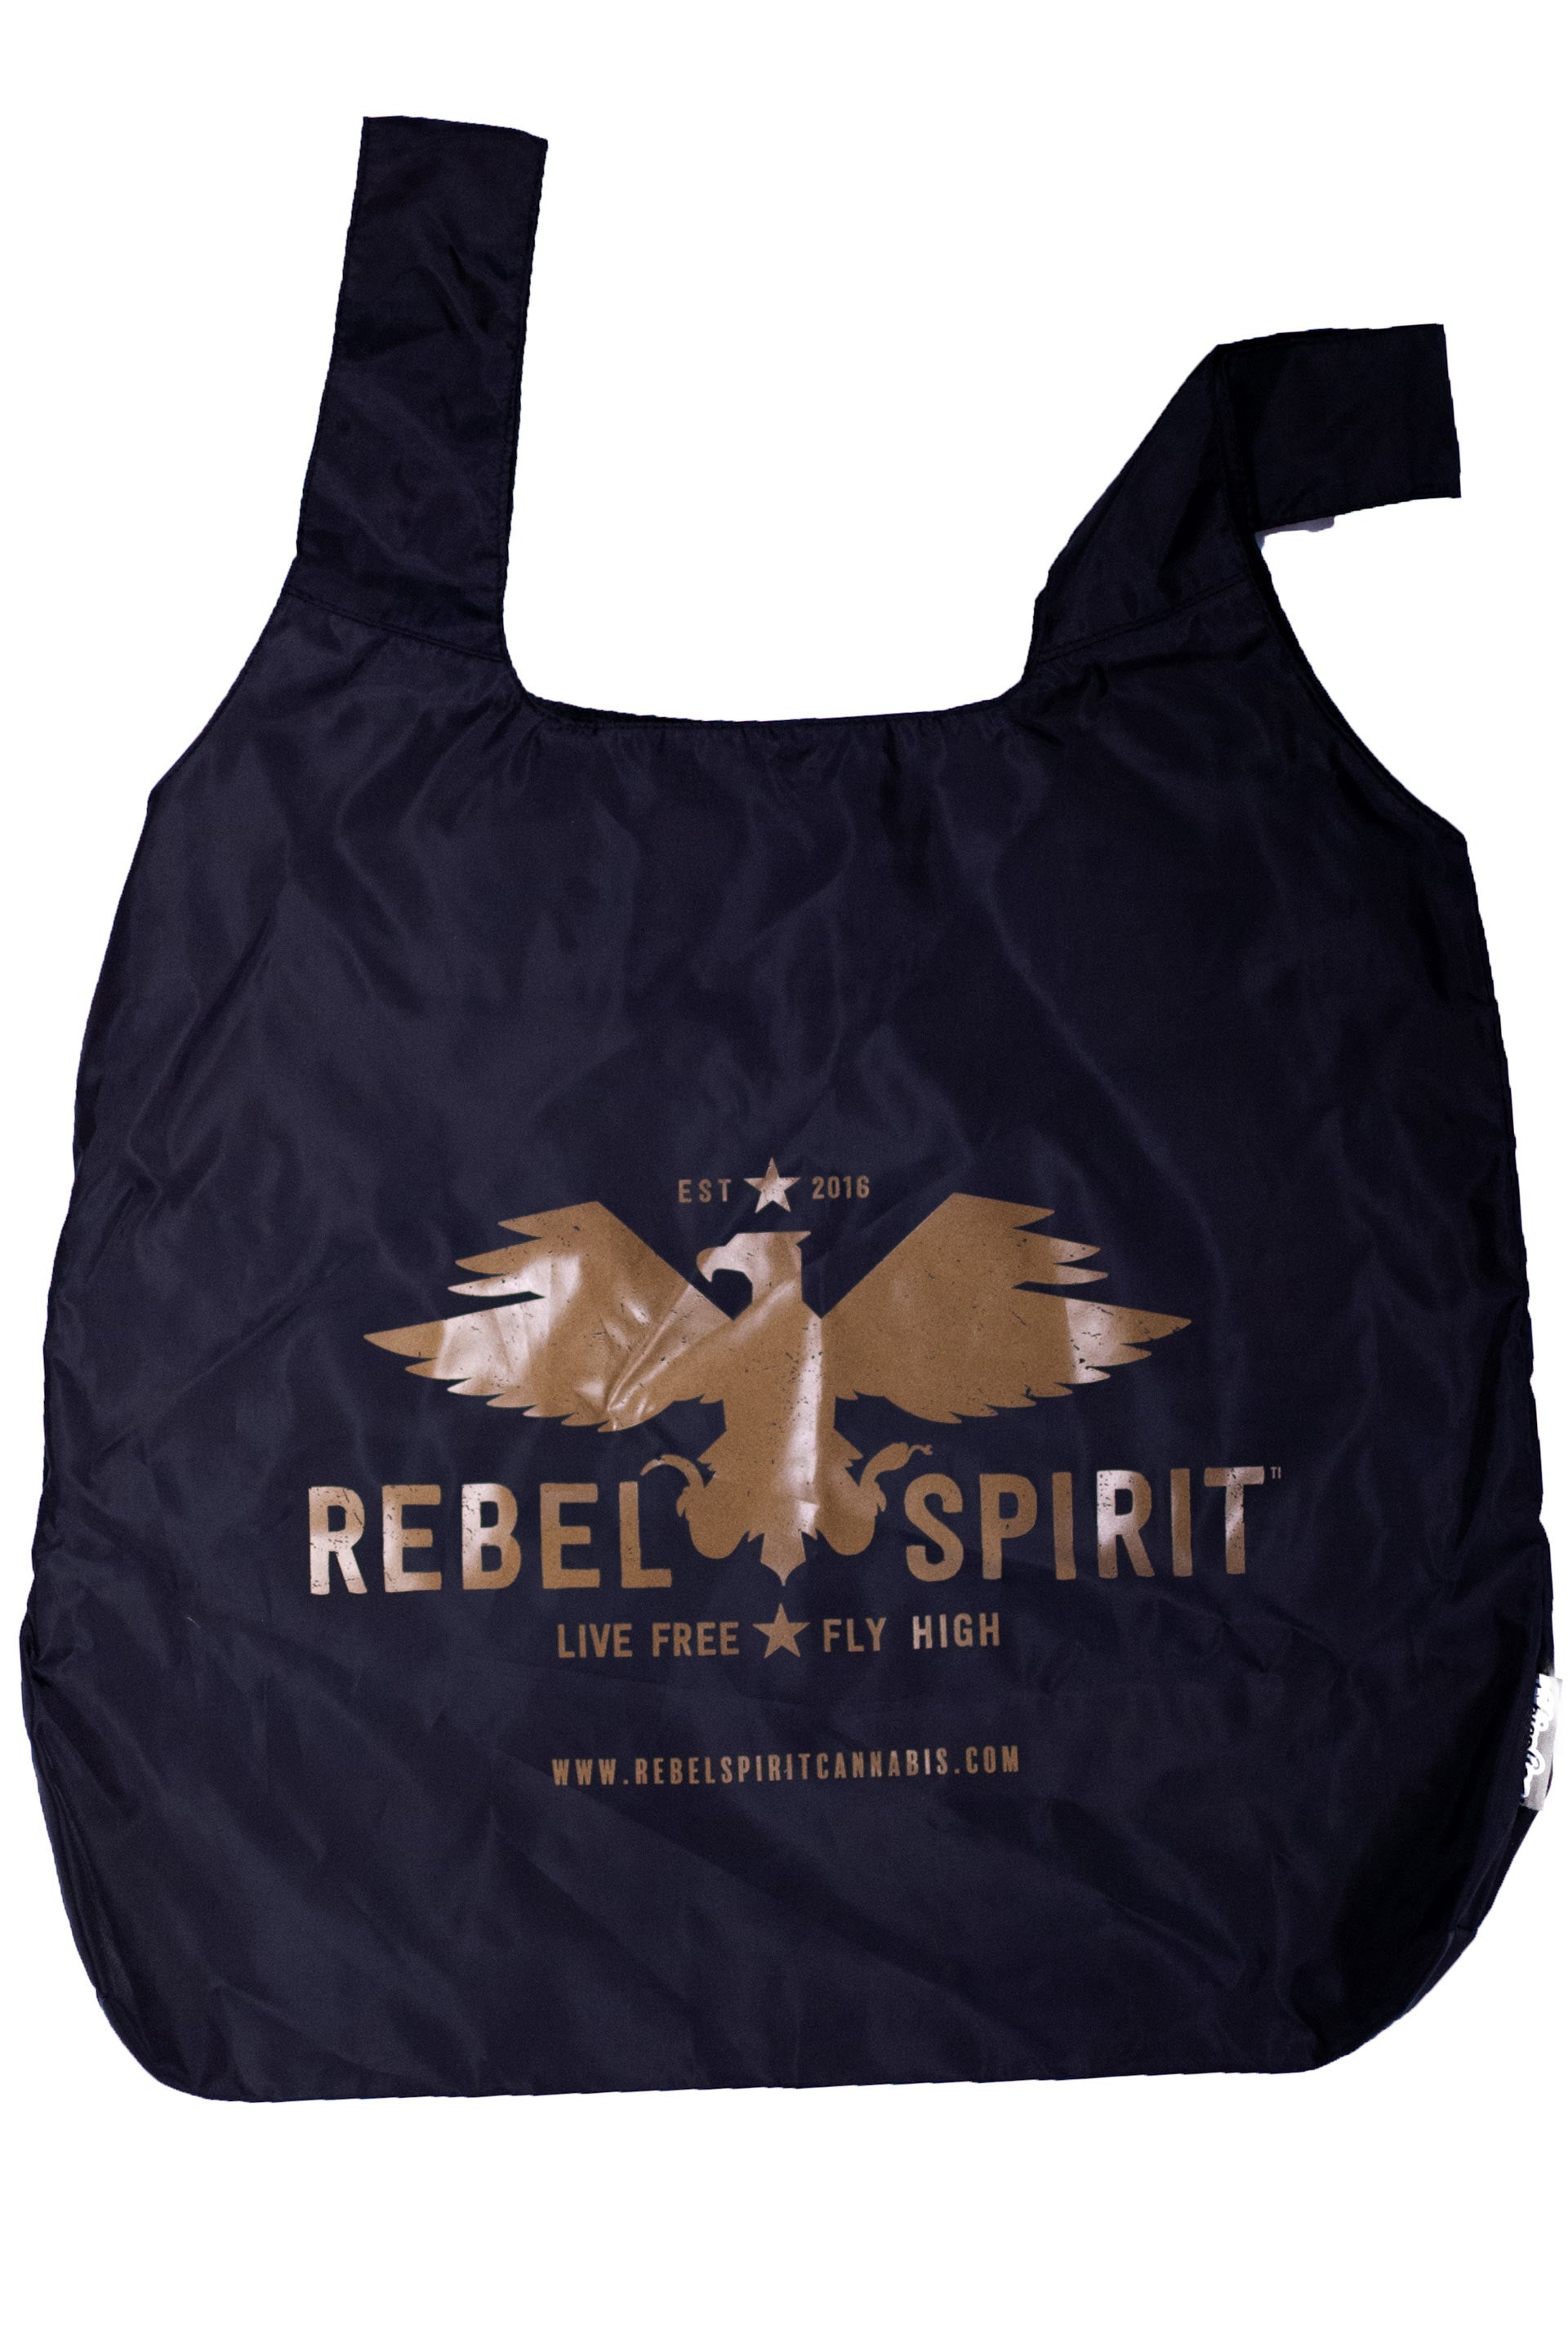 rebel spirit chico bag white background